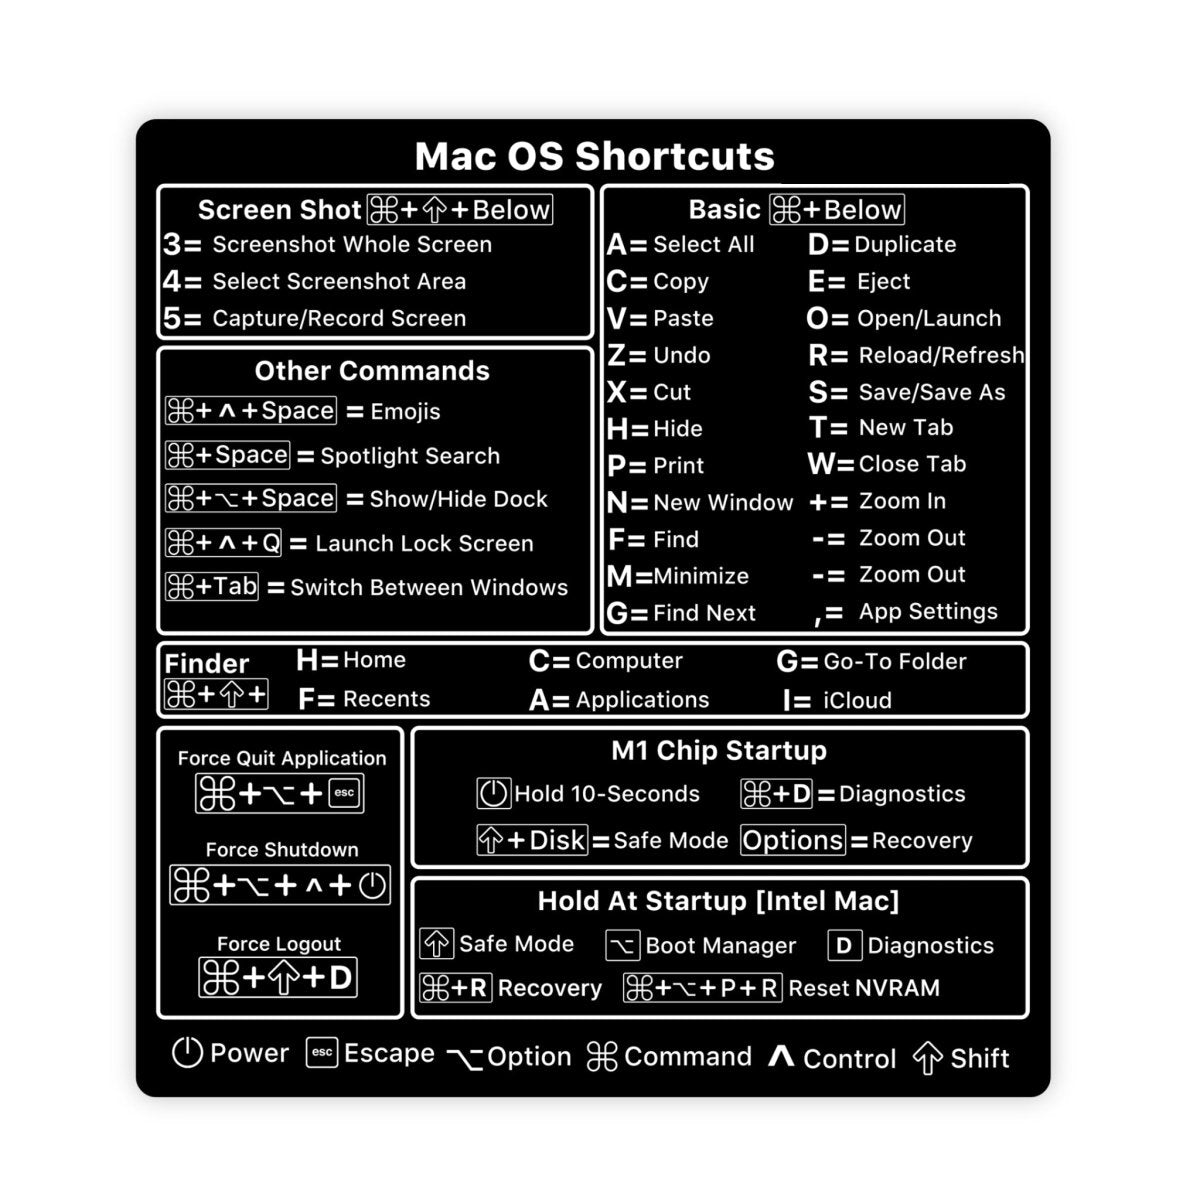 [M1/M2/Intel] Black Mac OS Shortcut Sticker [Works With All Mac Laptops] - stickerbull[M1/M2/Intel] Black Mac OS Shortcut Sticker [Works With All Mac Laptops]Retail StickerstickerbullstickerbullTaylor_BlackMac [#77]Black[M1/M2/Intel] Black Mac OS Shortcut Sticker [Works With All Mac Laptops]